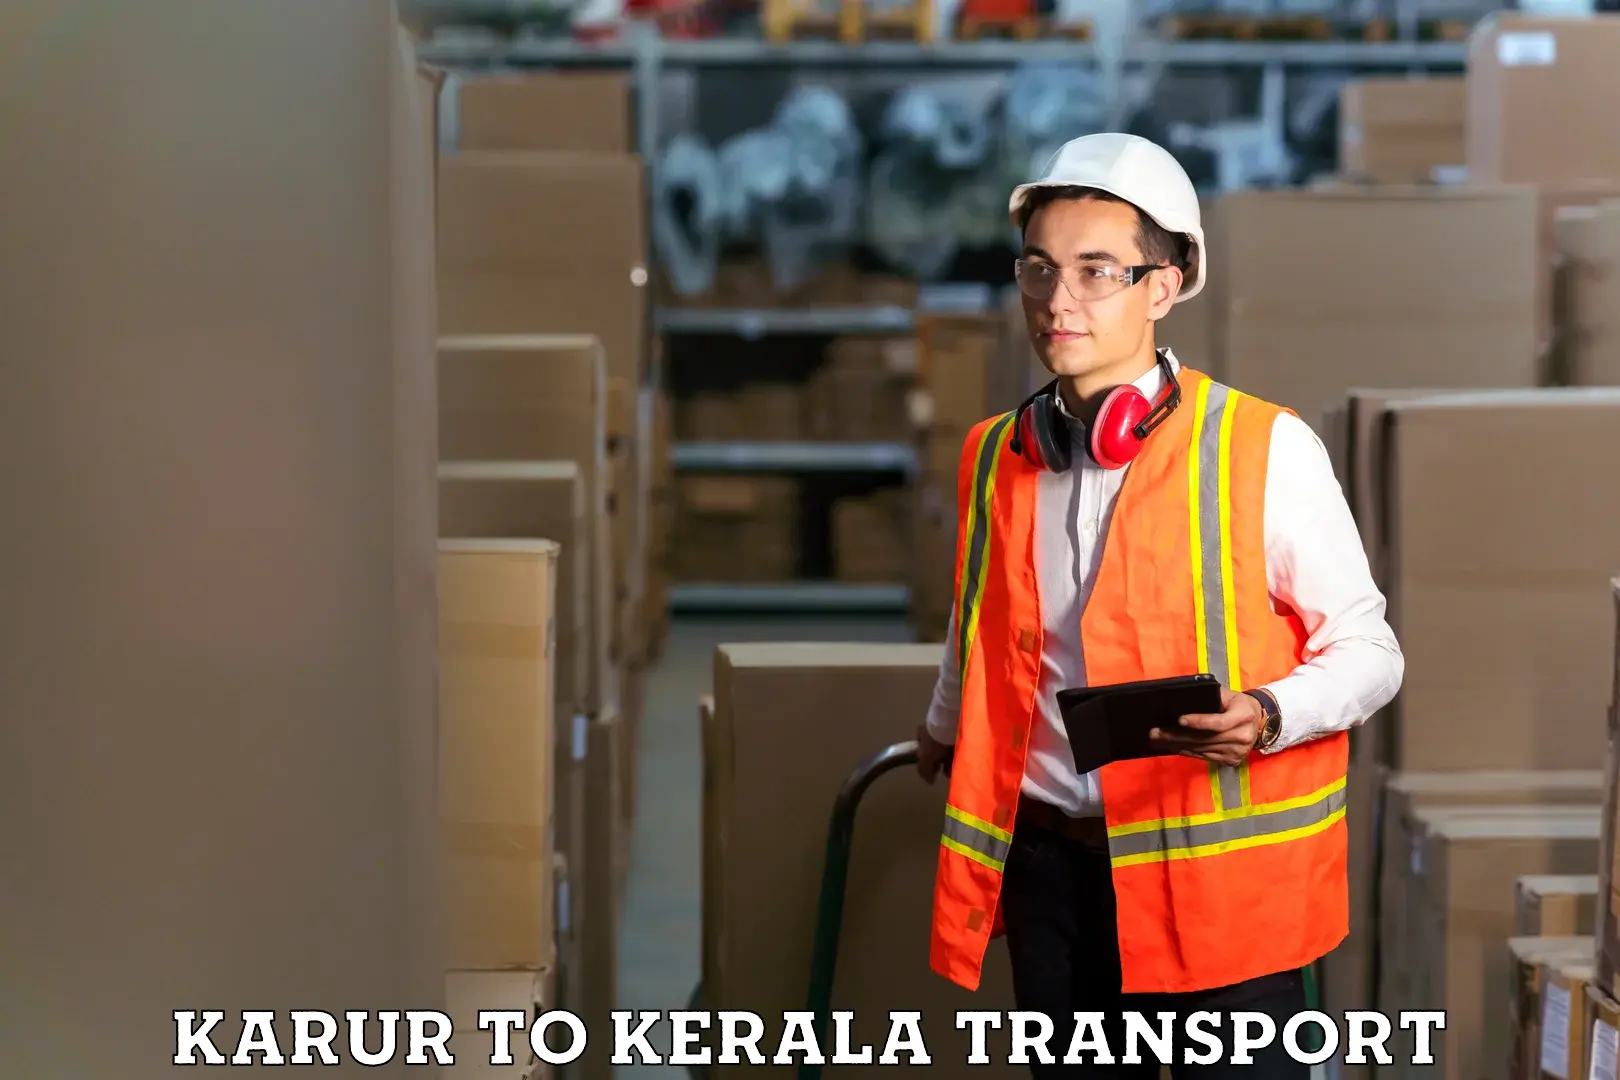 Shipping services Karur to Kochi